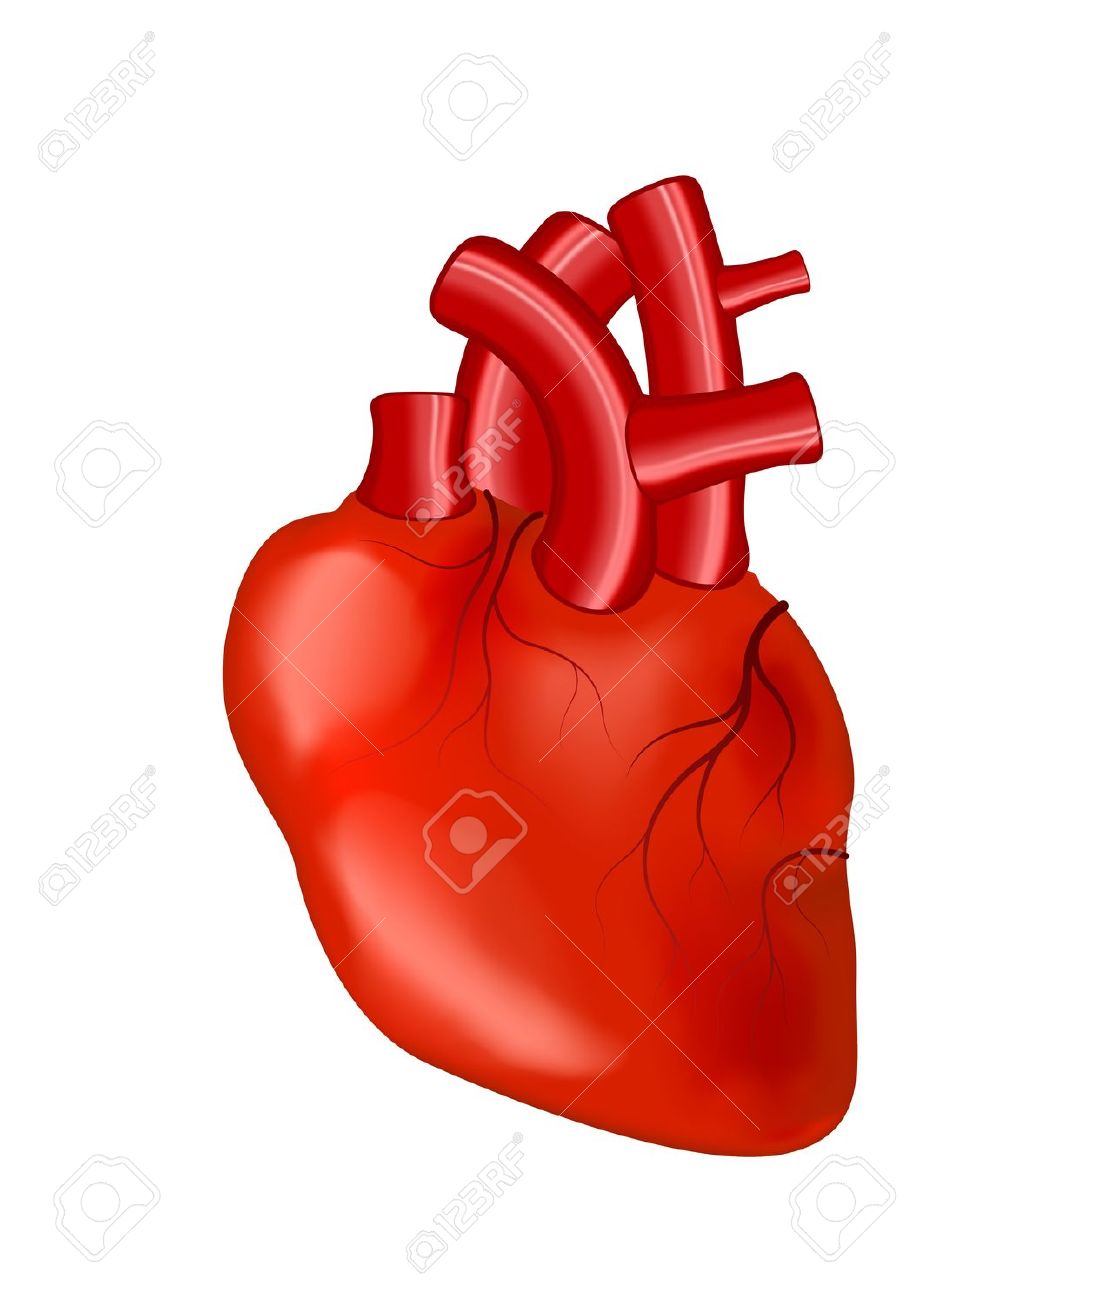 Human Heart Anatomy Cliparts .